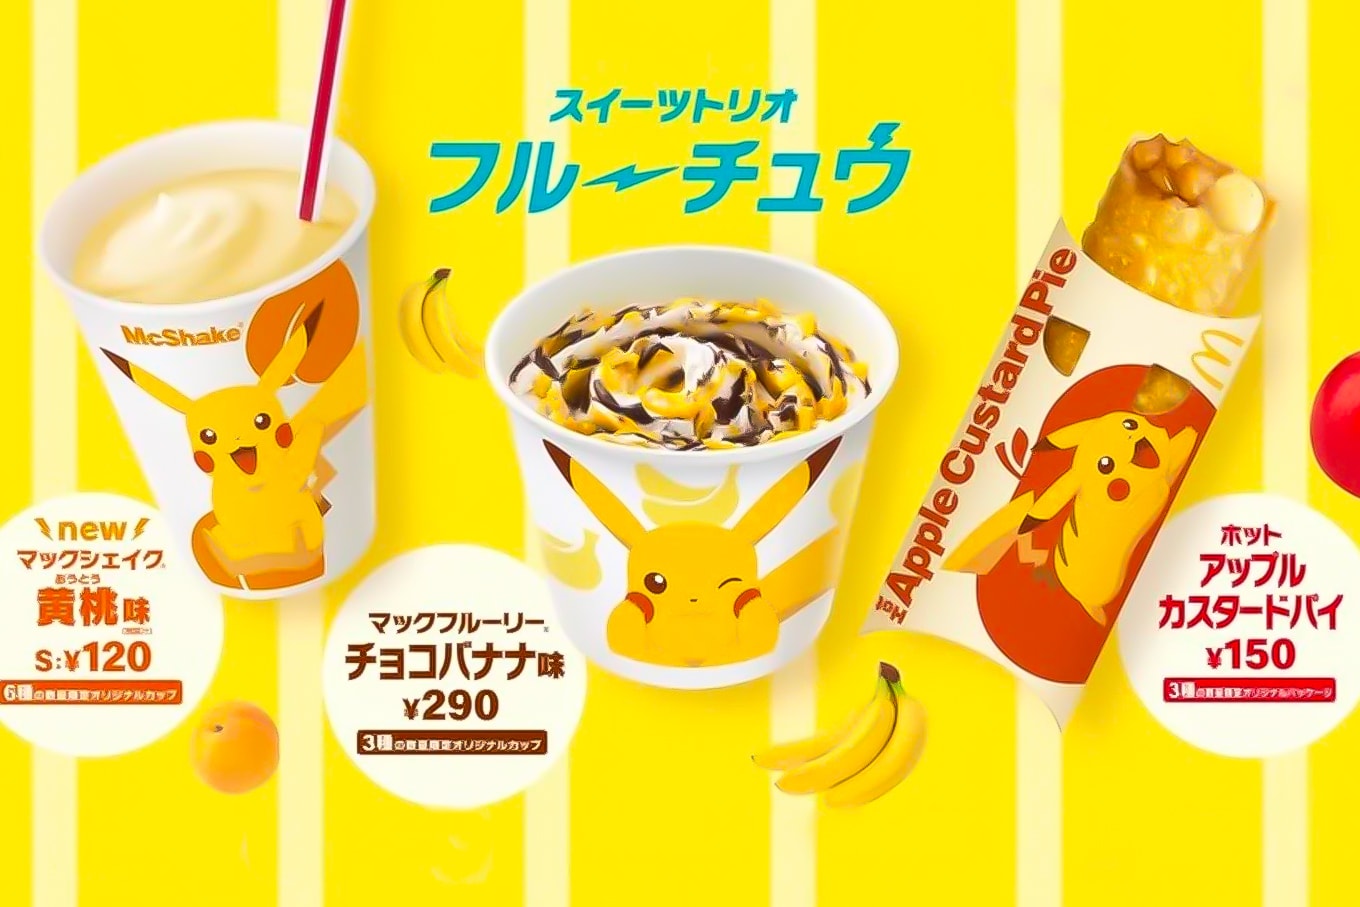 Mcdonald's Japan Pokemon Pikachu Sweets Trio Fruchu summer fruit menu apple custard banana Nintendo peach desserts sweets 